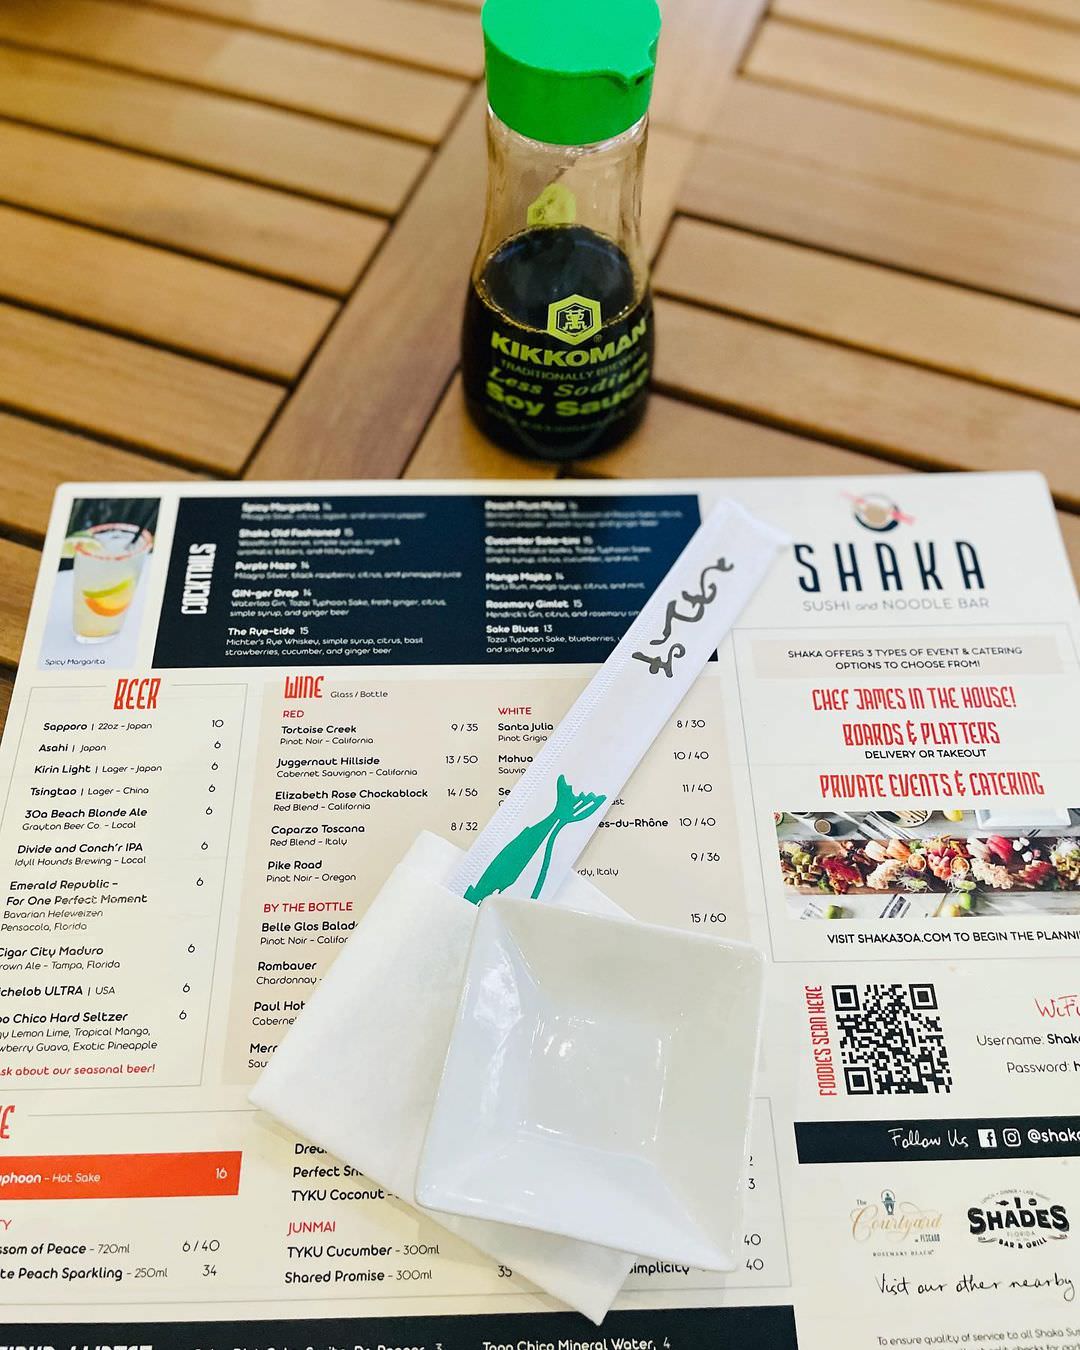 30A Restaurants - Shaka Sushi and Noodle Bar - Original Photo